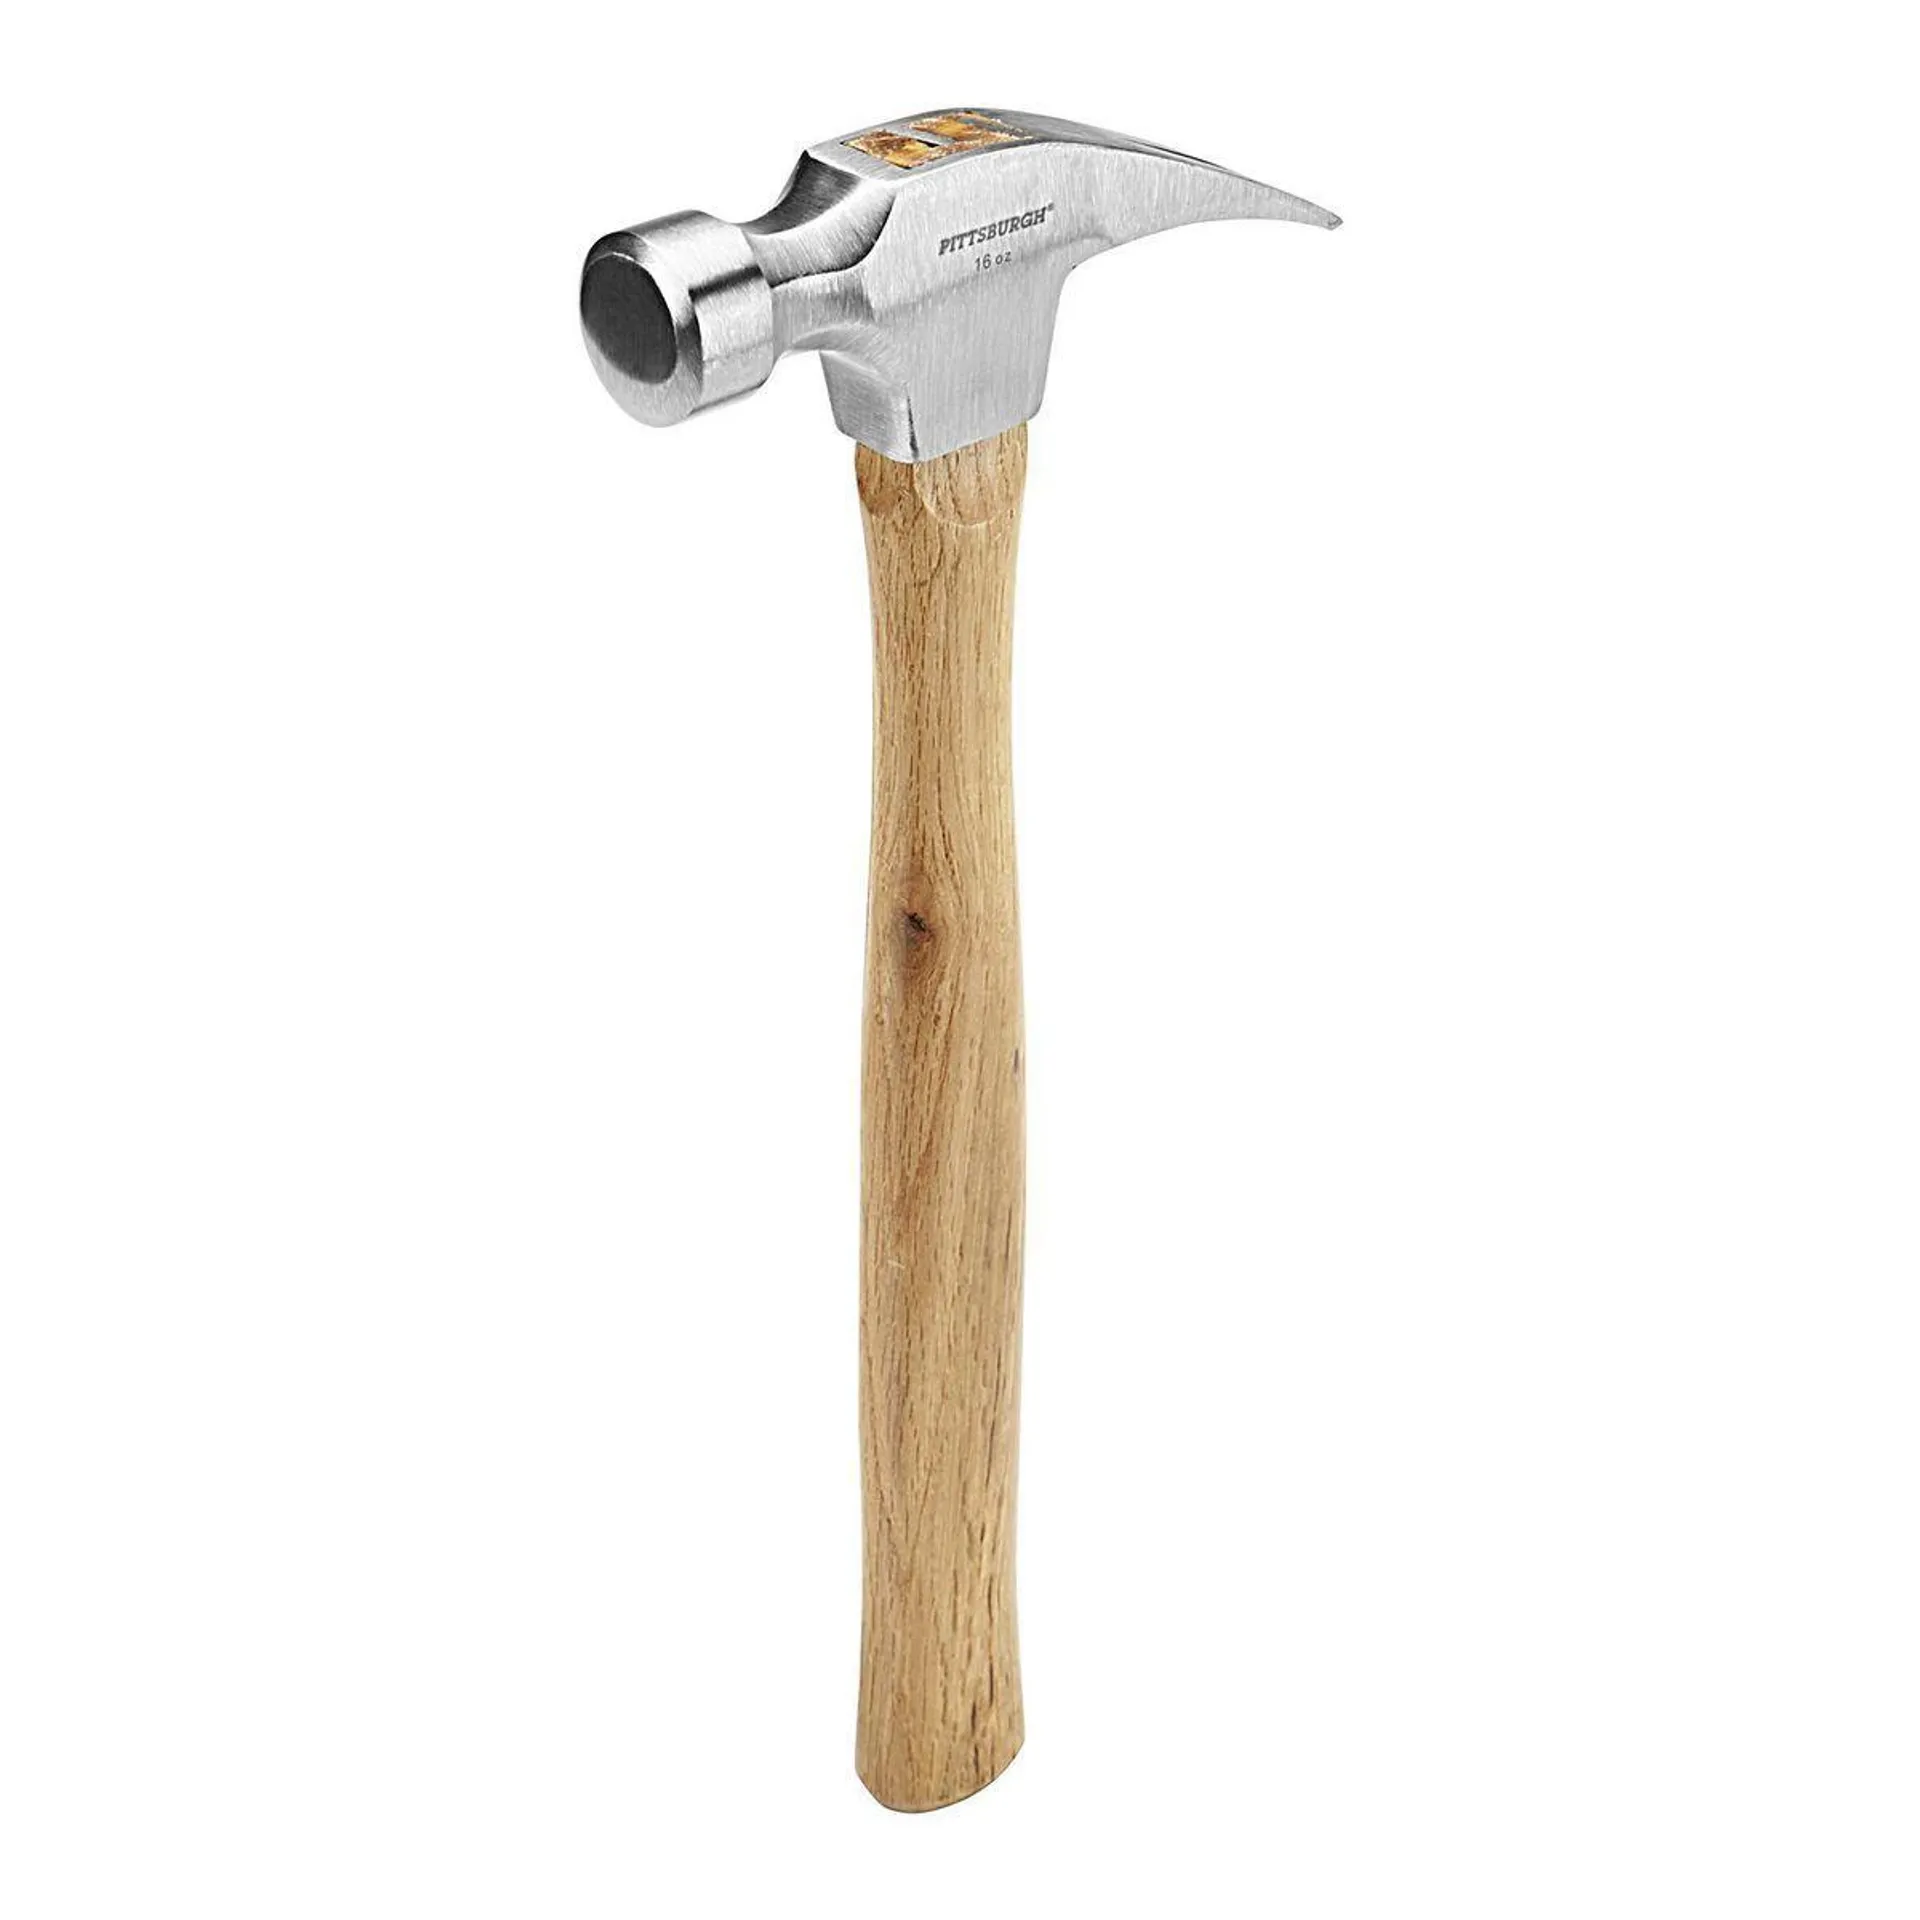 PITTSBURGH 16 oz. Hardwood Rip Hammer